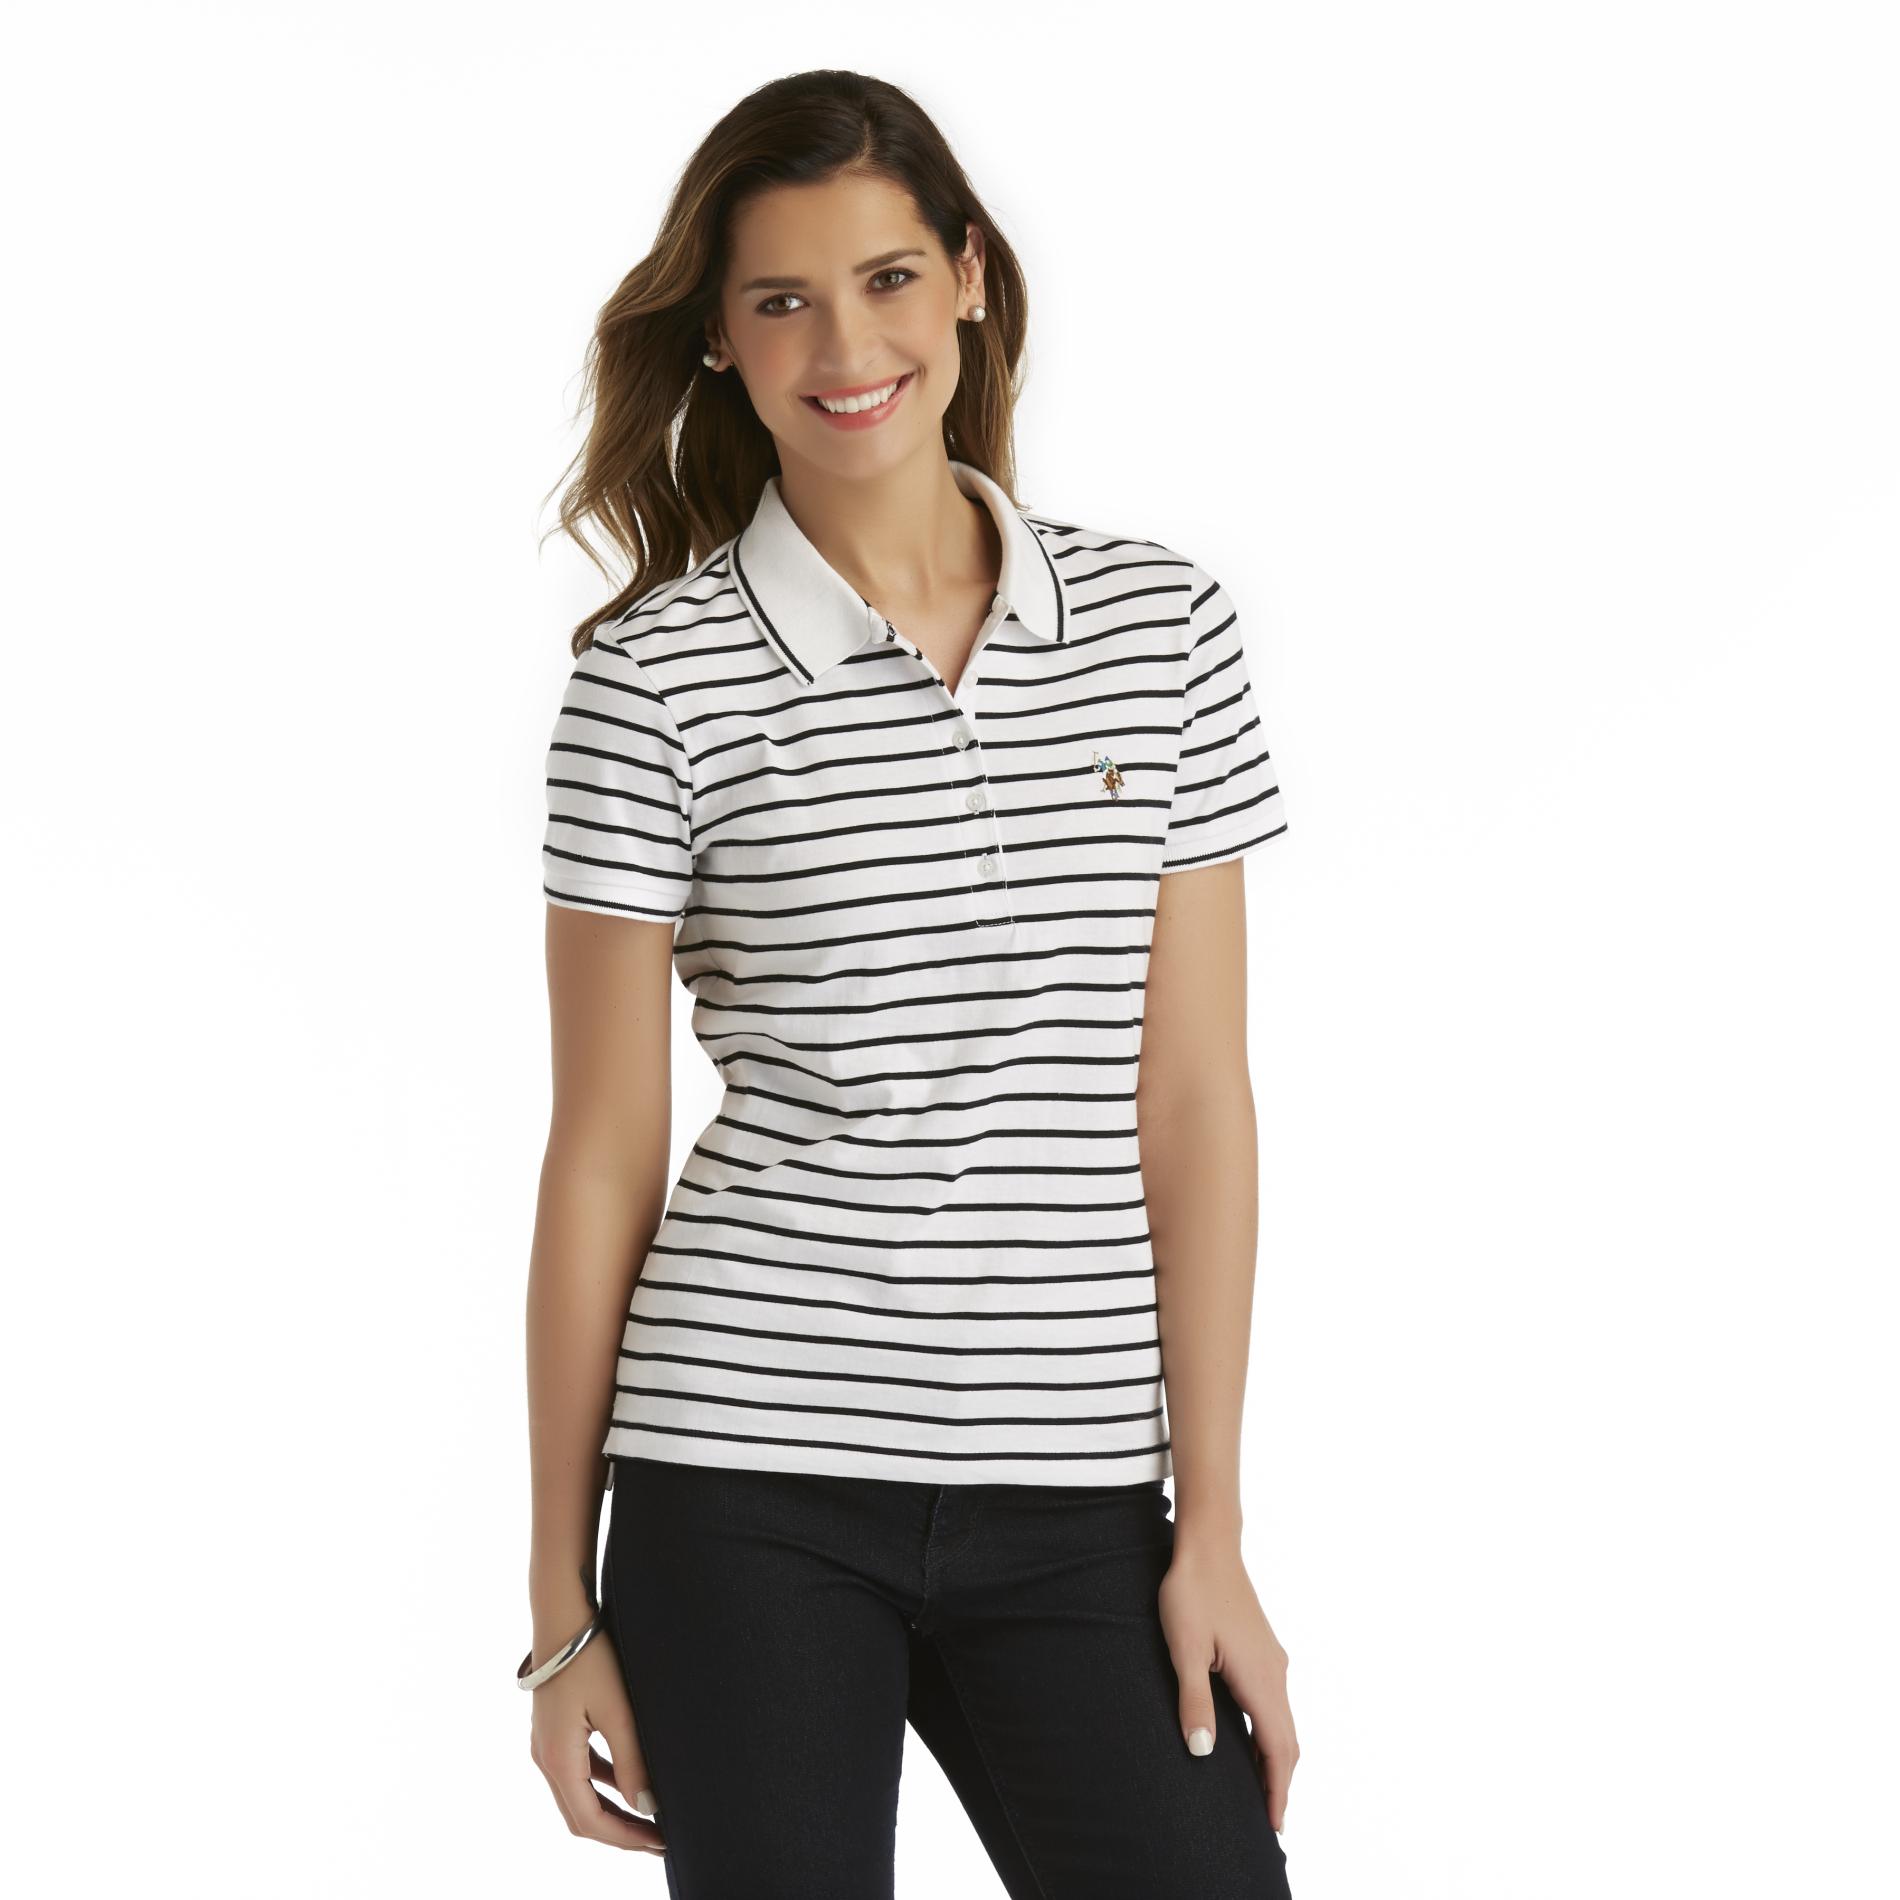 U.S. Polo Assn. Women's Interlock Polo Shirt - Striped